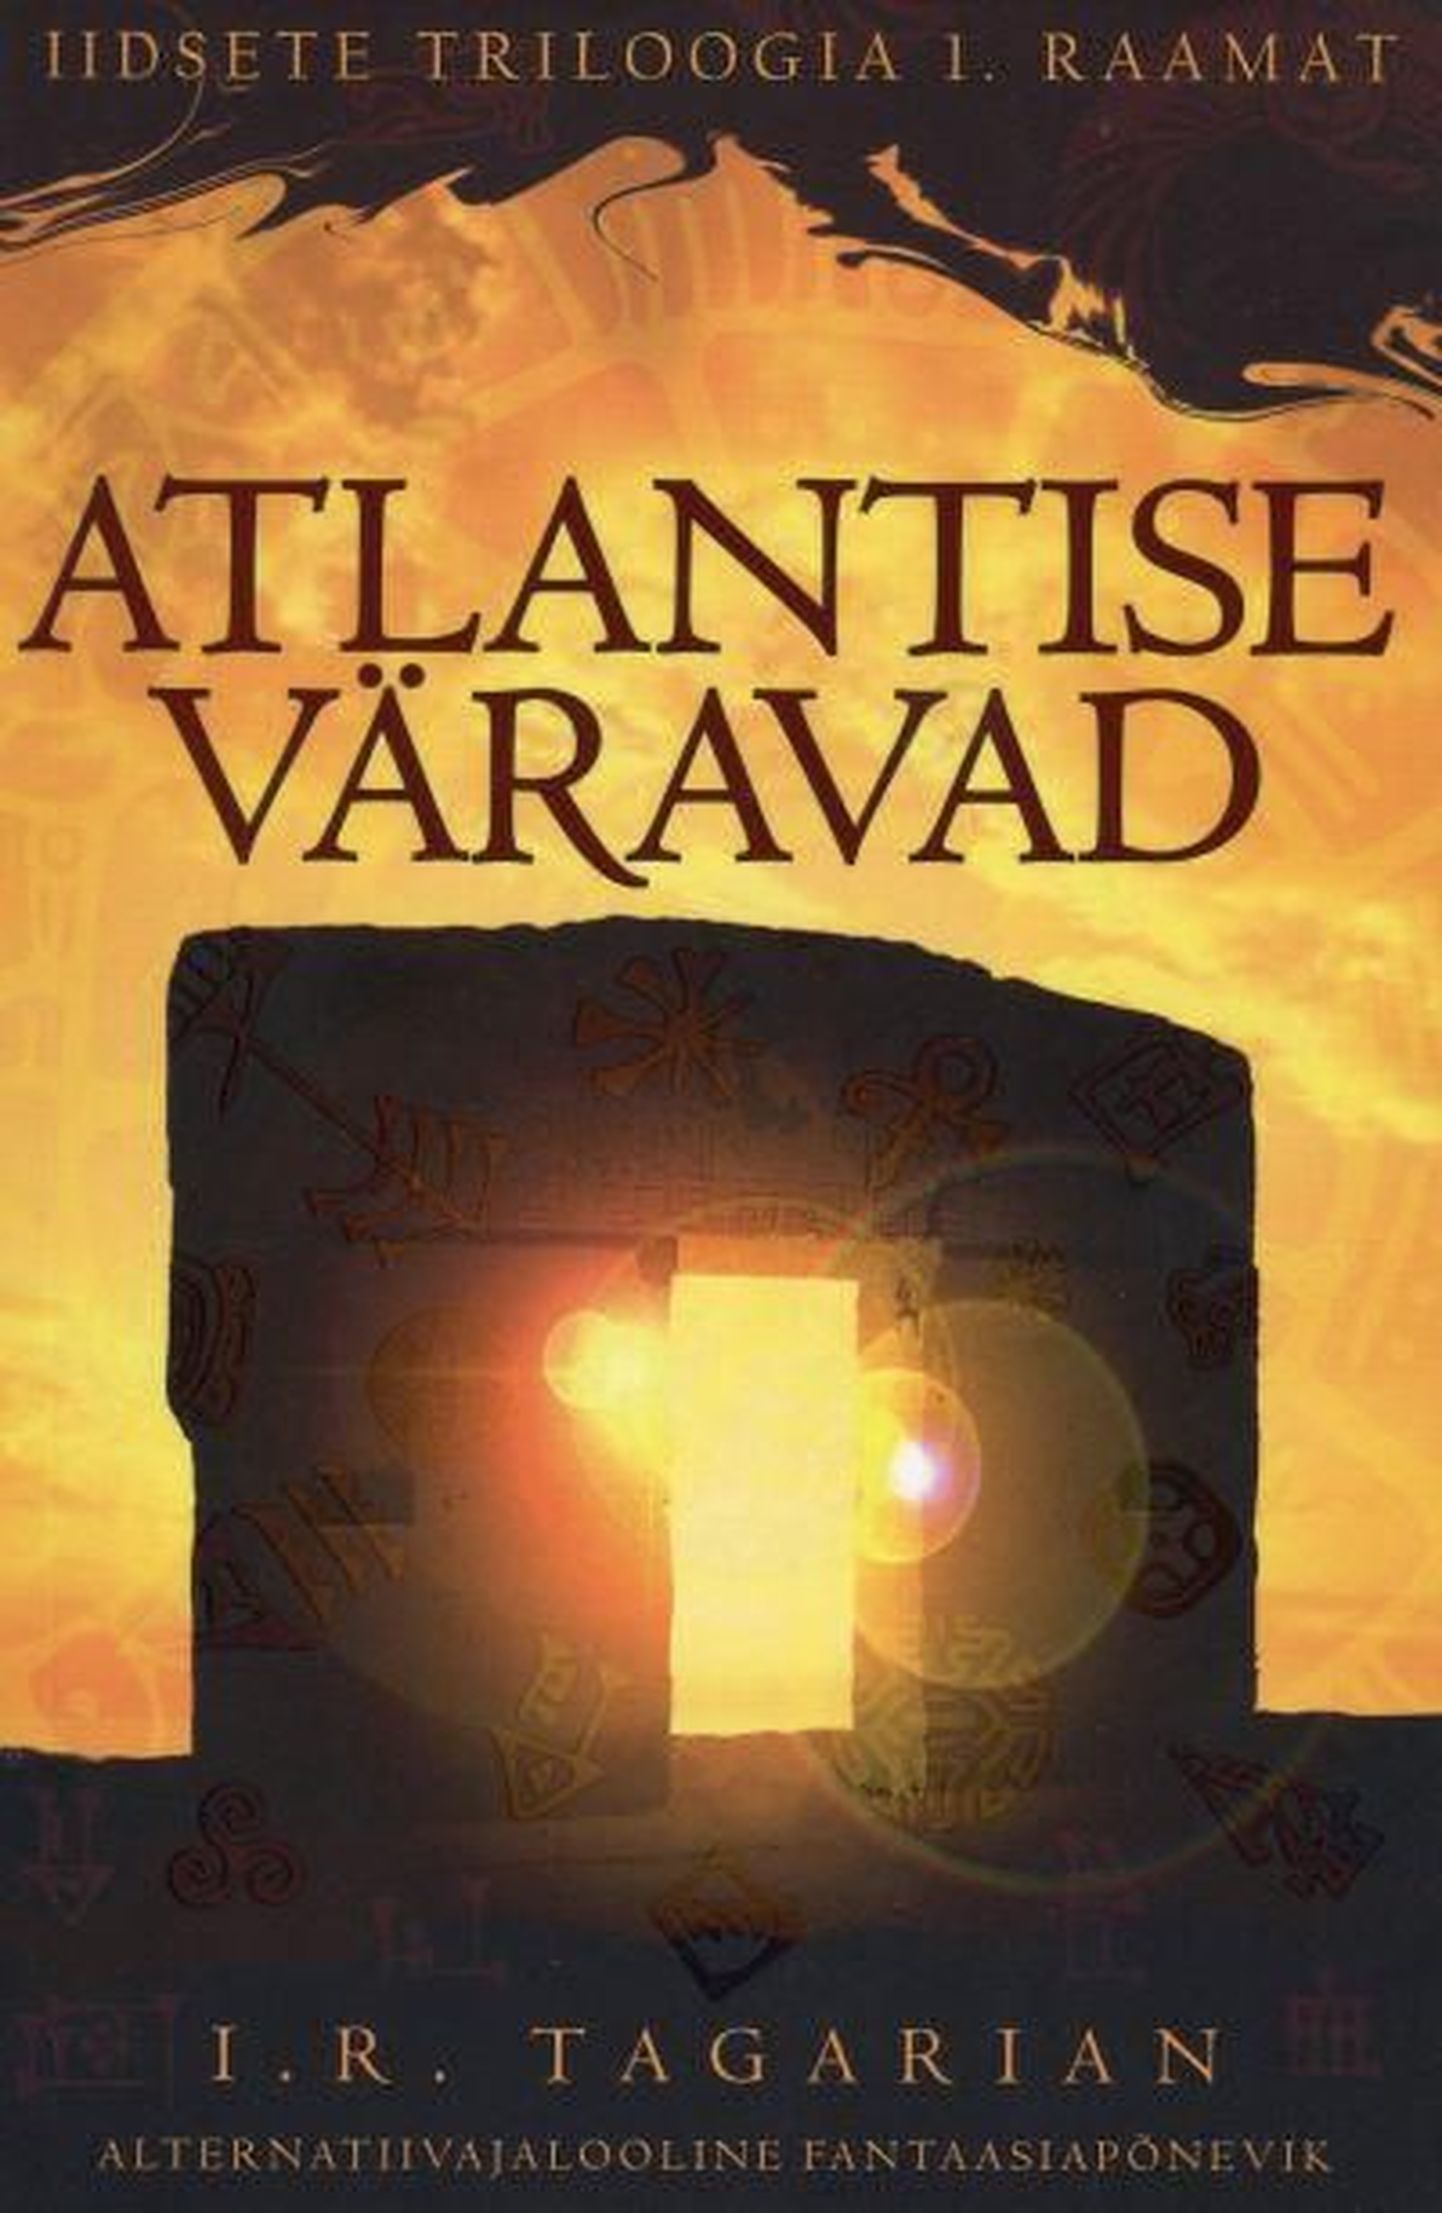 I. R. Tagarian «Atlantise väravad».